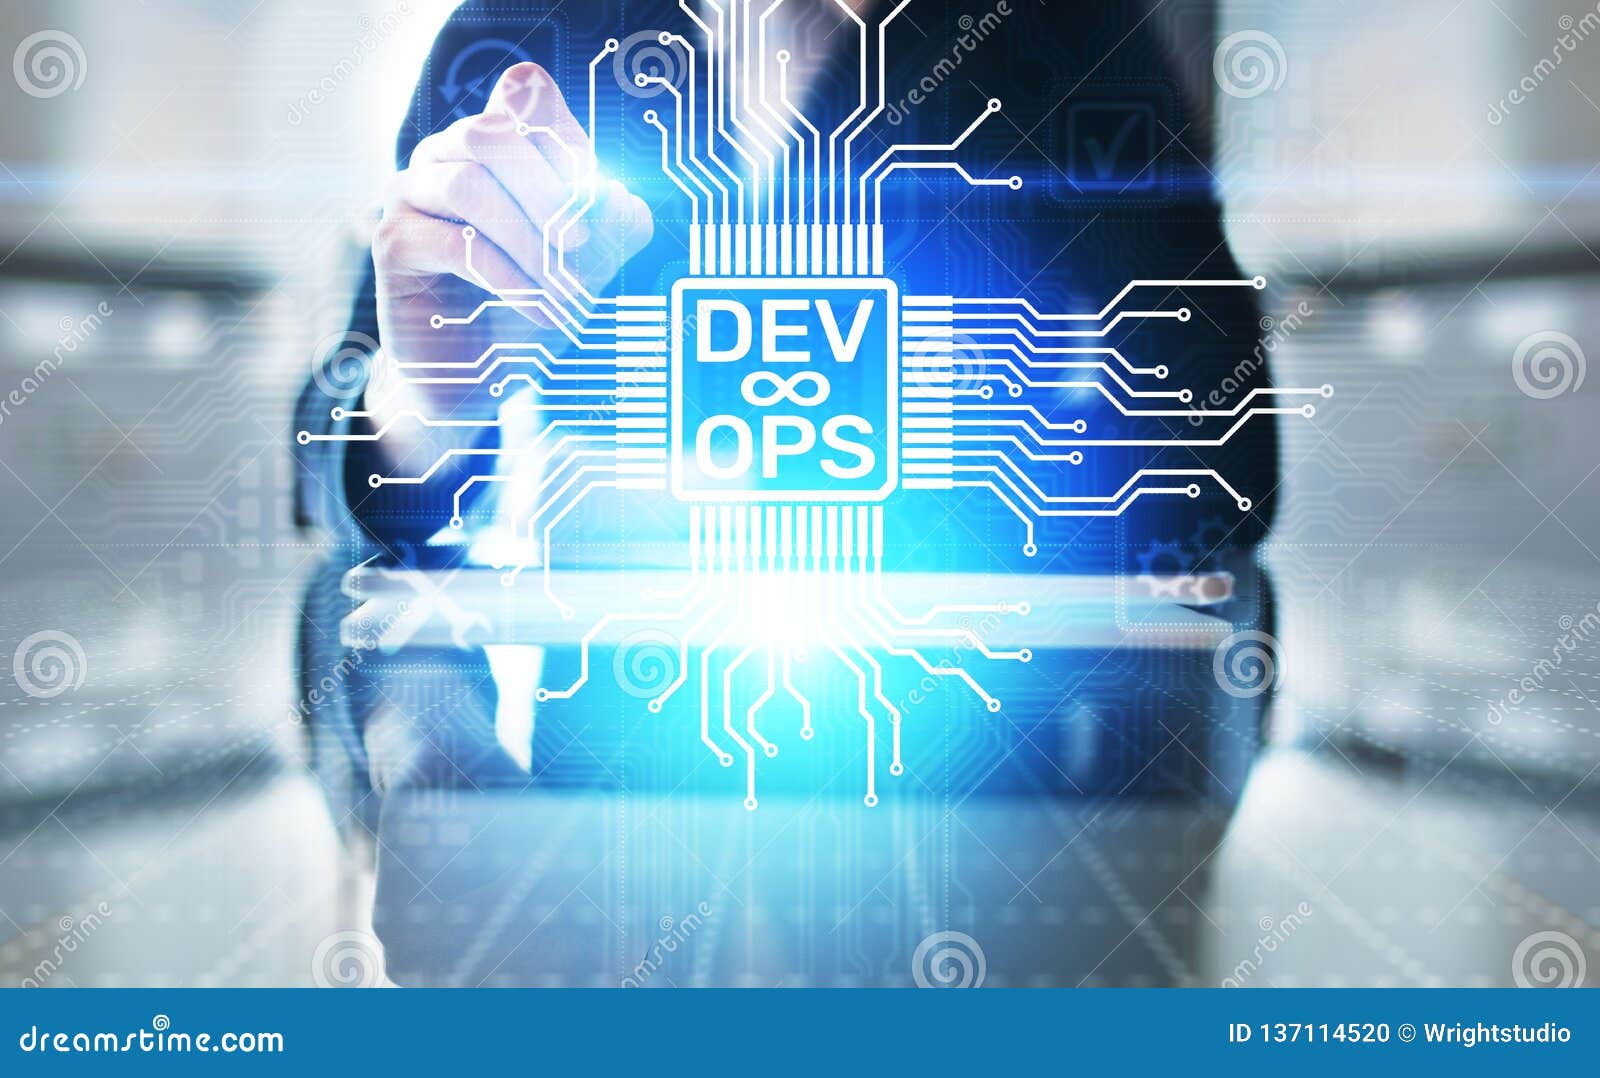 devops agile development and optimisation concept on virtual screen.